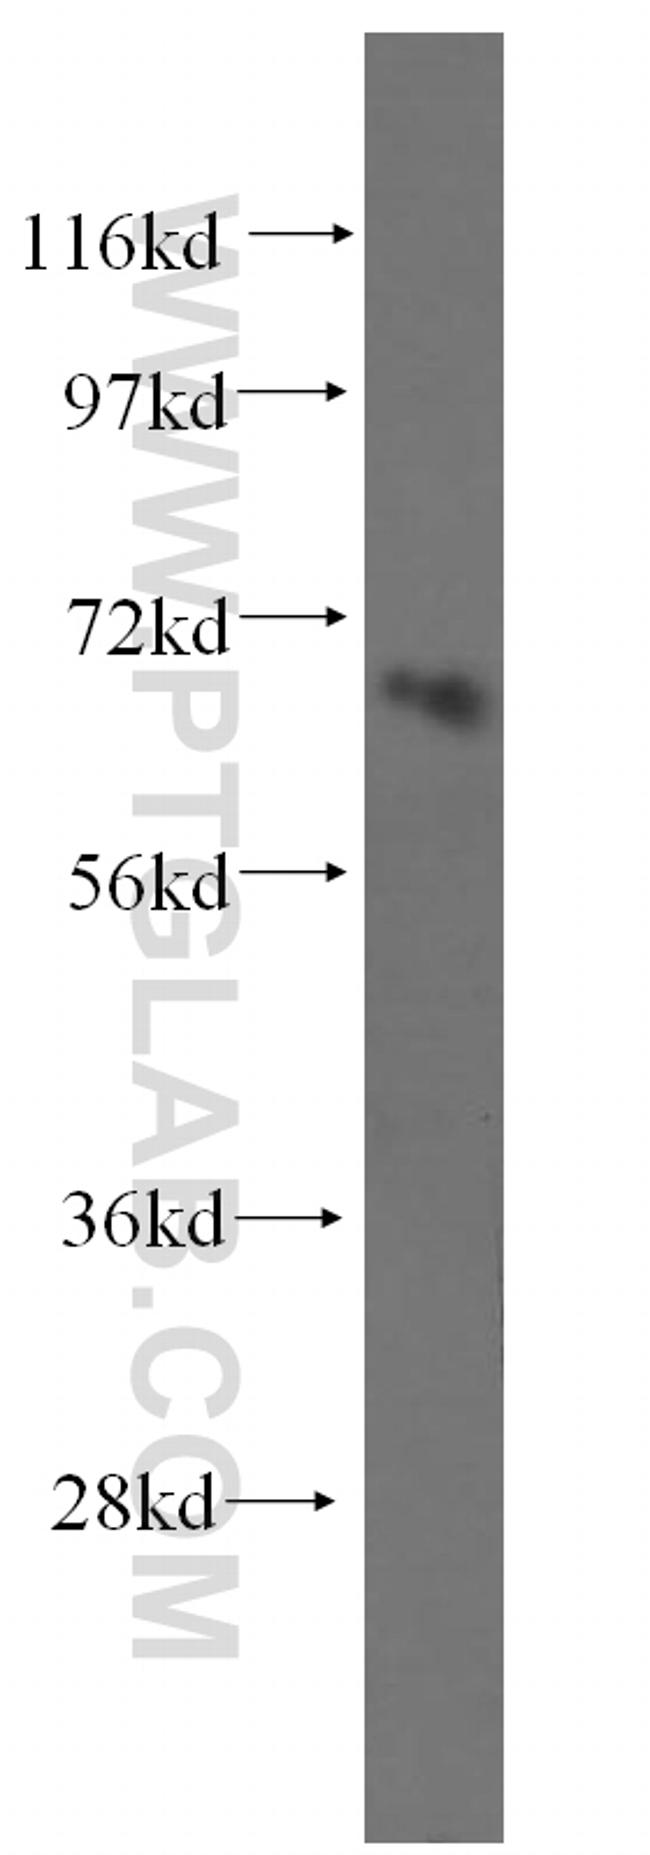 NFE2L1 Antibody in Western Blot (WB)